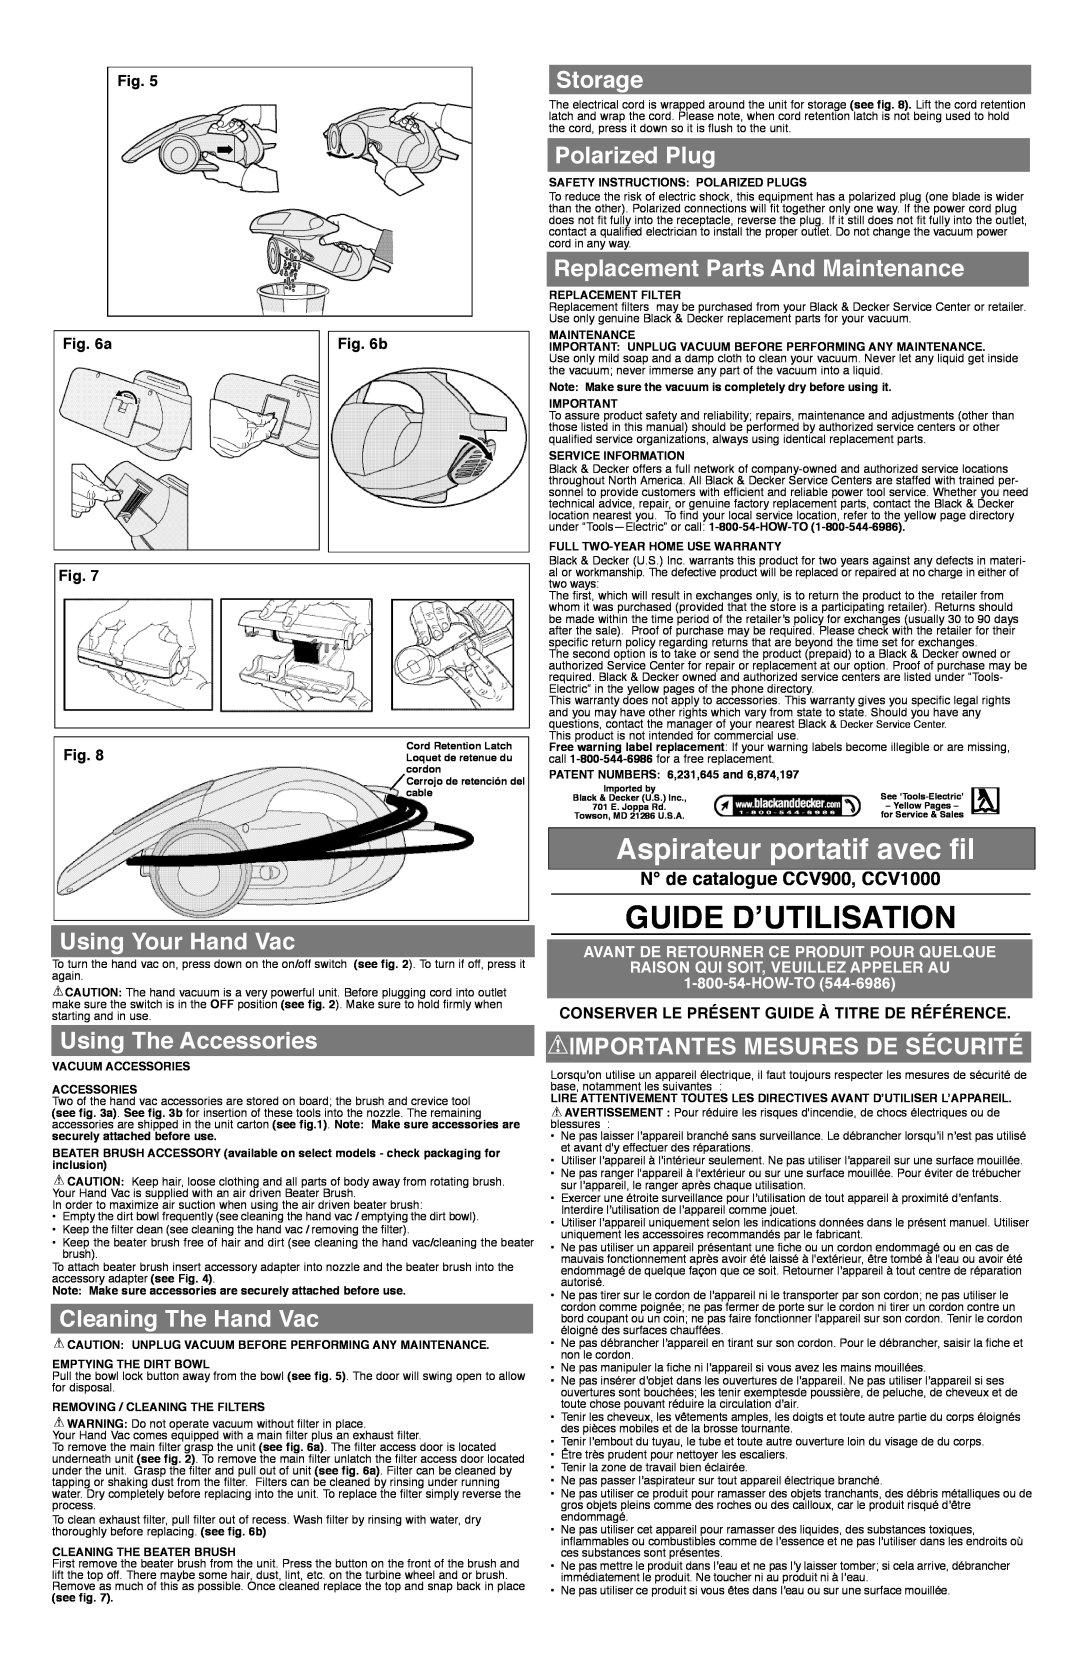 Black & Decker CCV1000 Guide D’Utilisation, Aspirateur portatif avec fil, Storage, Using Your Hand Vac, Polarized Plug, b 